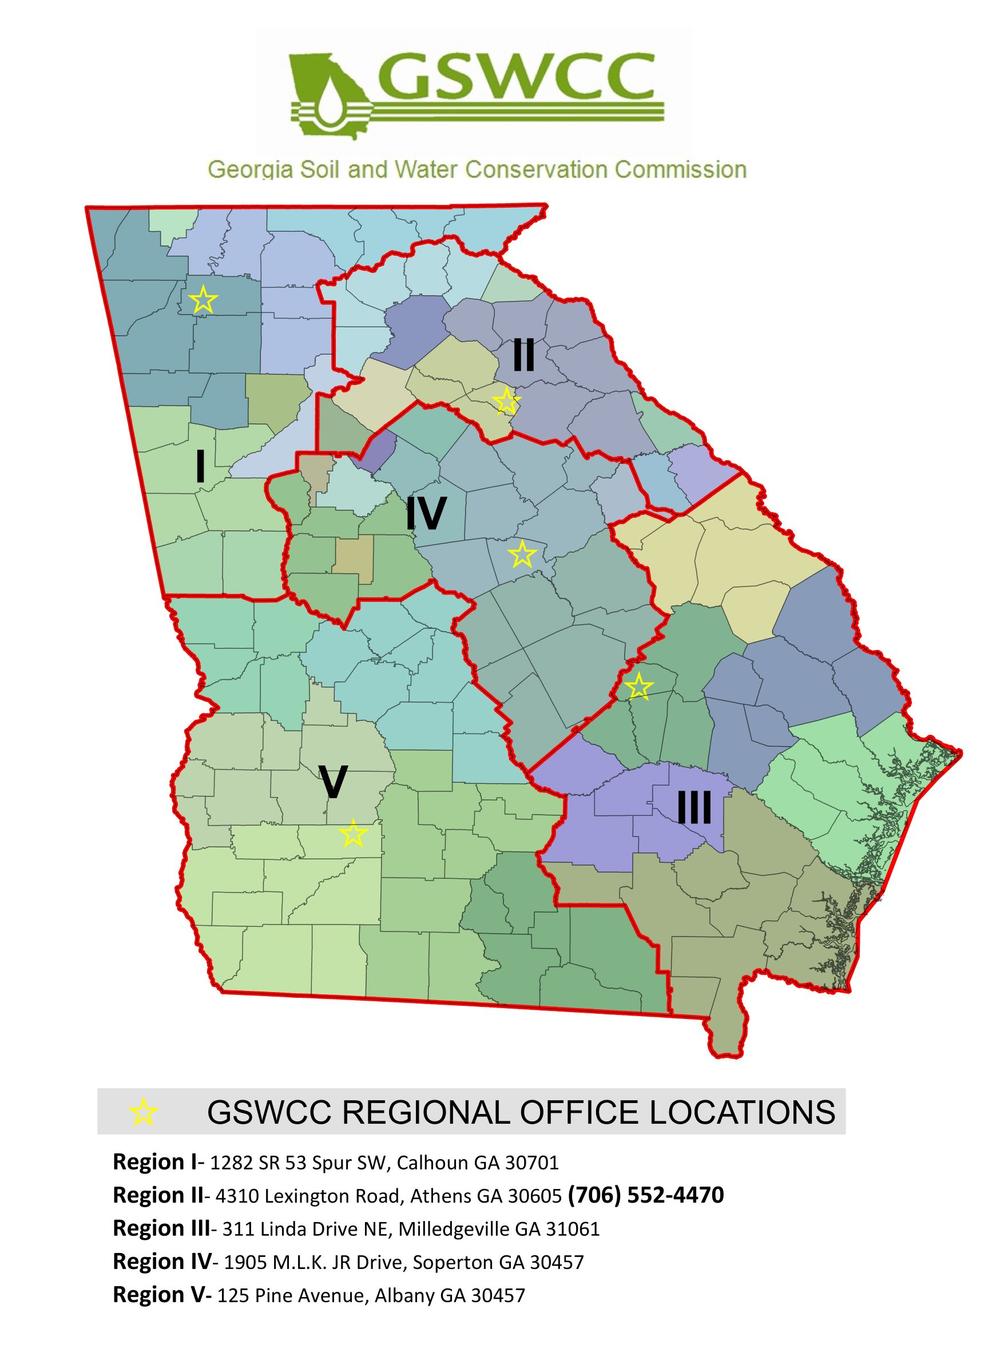 GSWCC Regional office locations